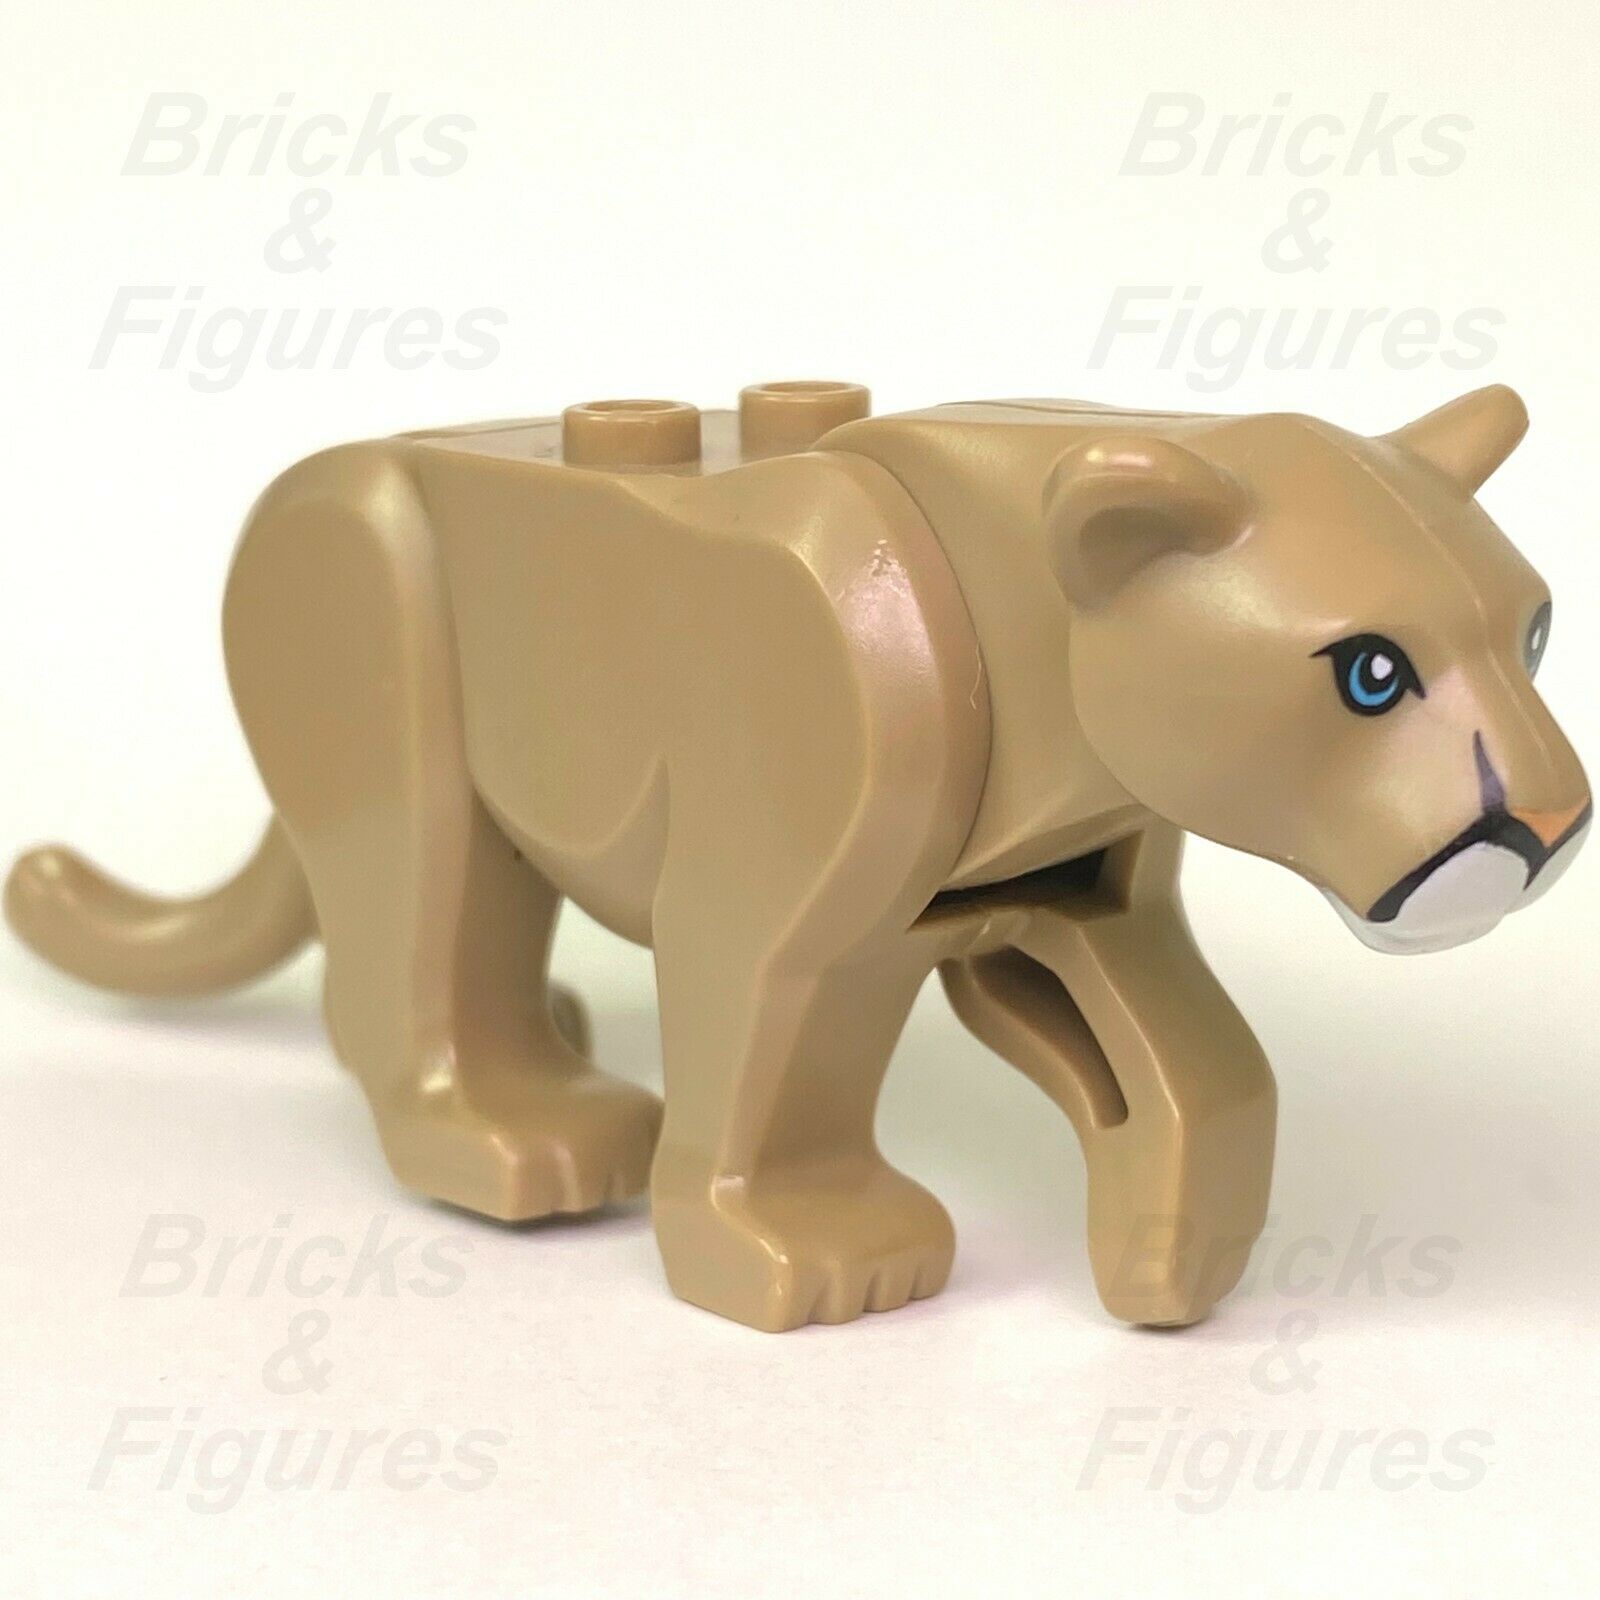 New Town City Police LEGO Mountain Lion Animal Cat Minifigure Part 60174 - Bricks & Figures